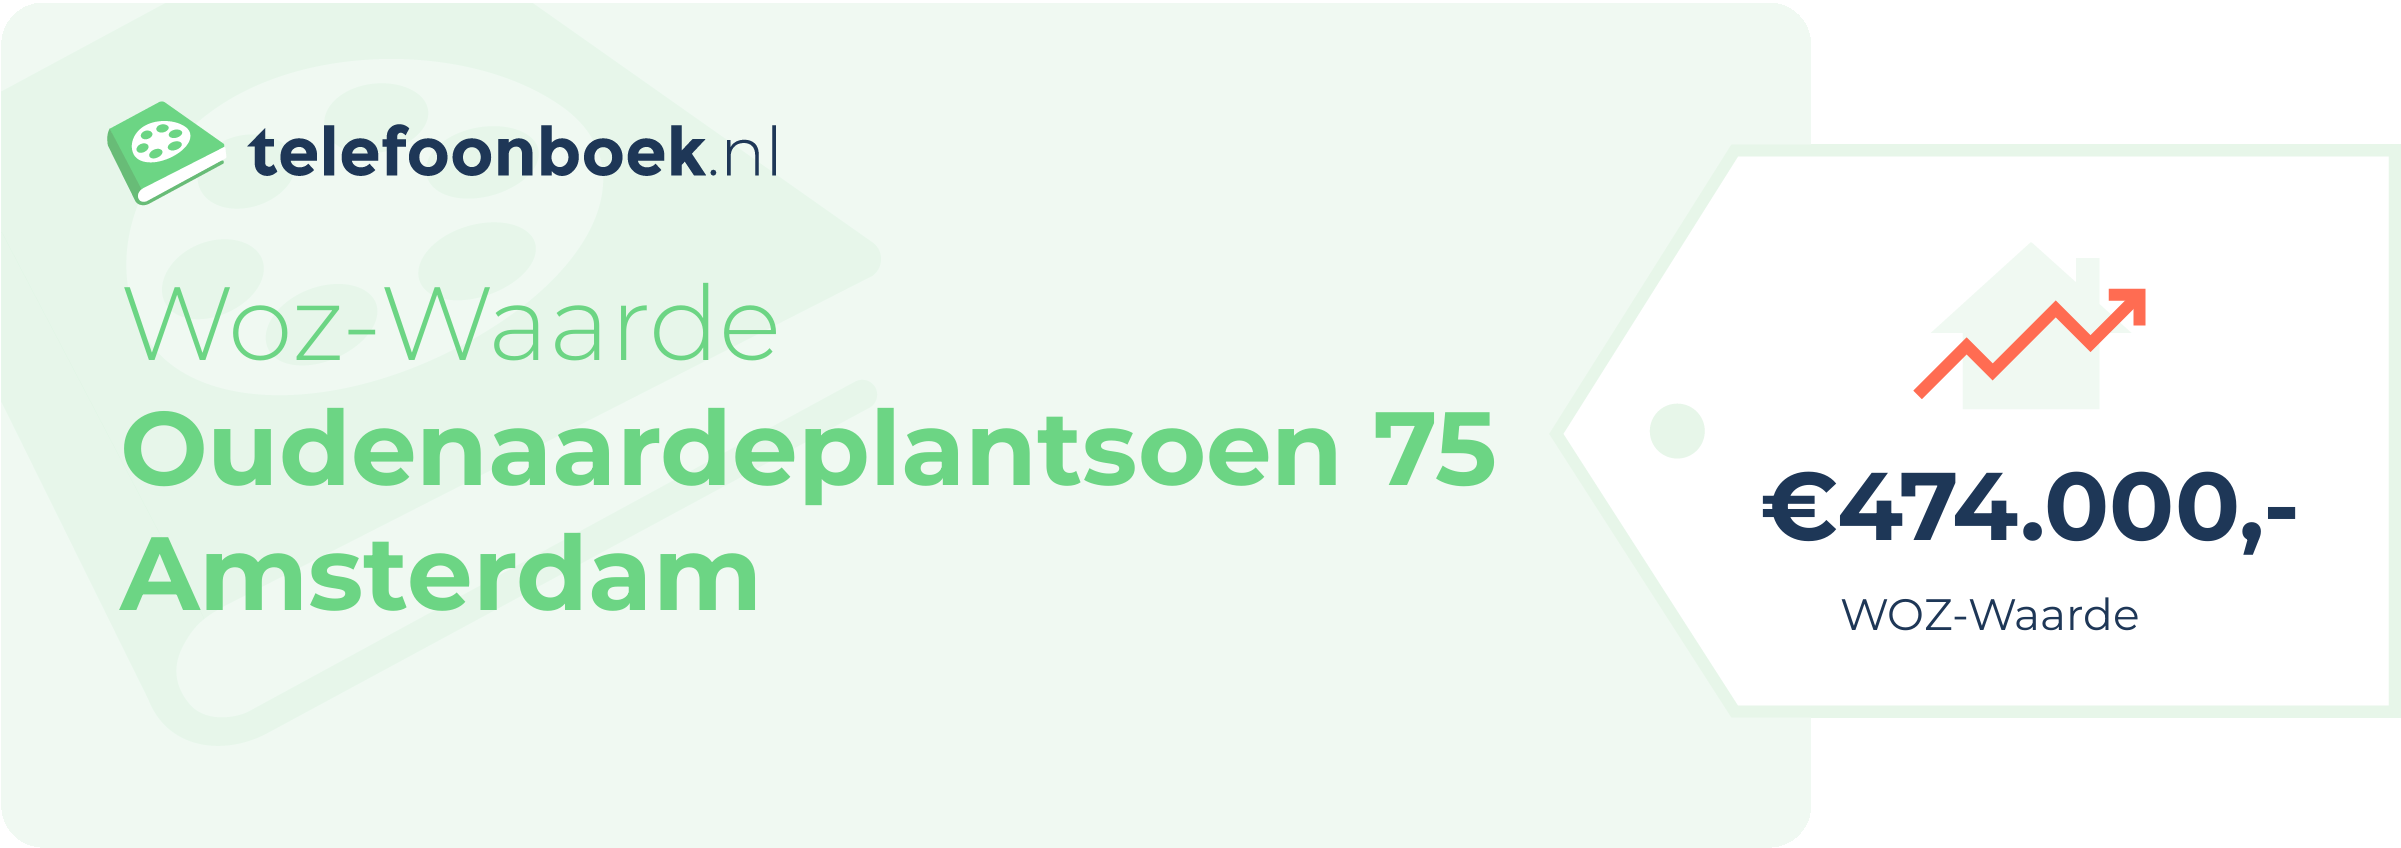 WOZ-waarde Oudenaardeplantsoen 75 Amsterdam